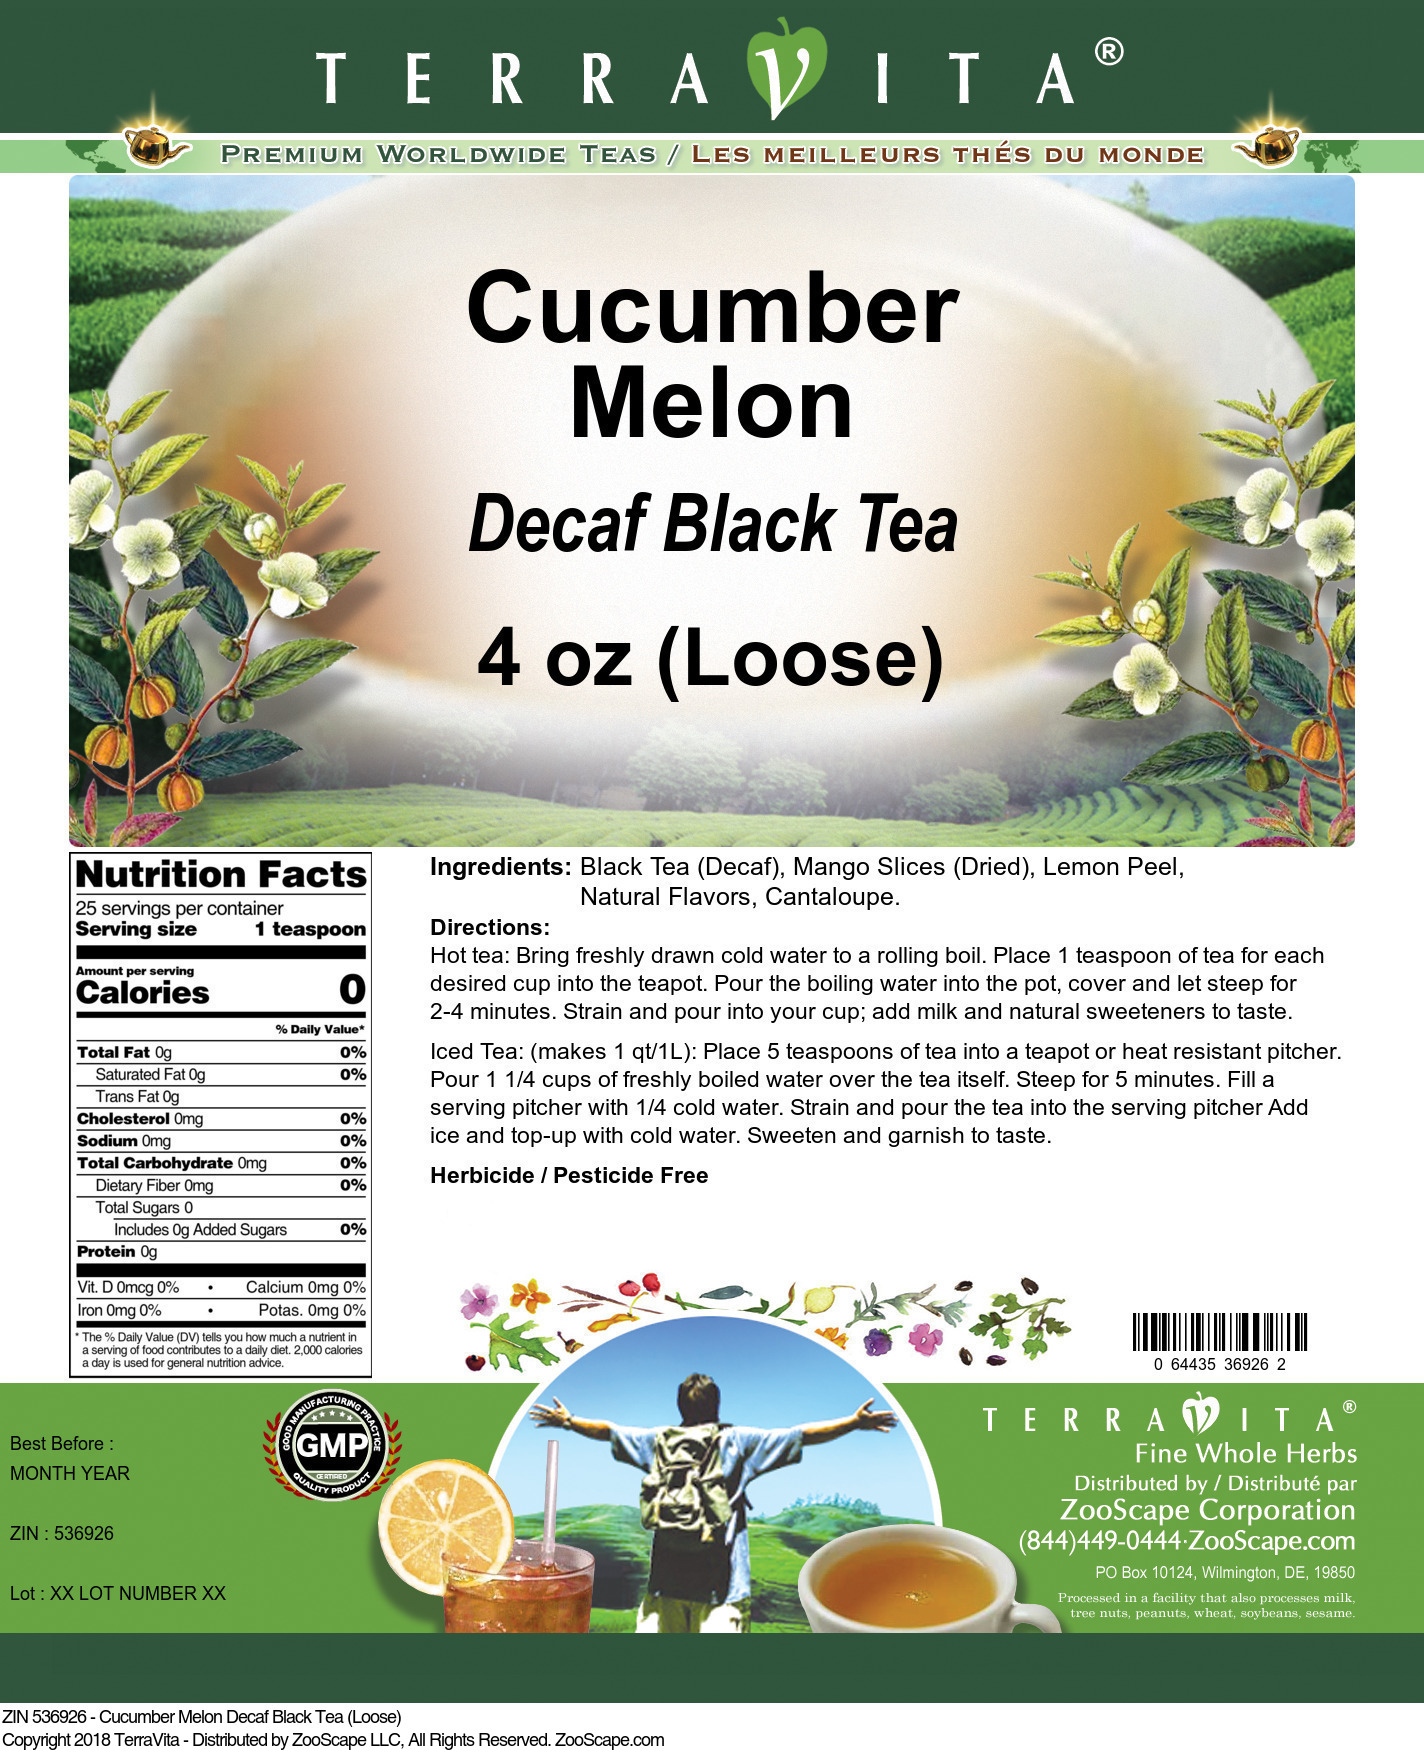 Cucumber Melon Decaf Black Tea (Loose) - Label